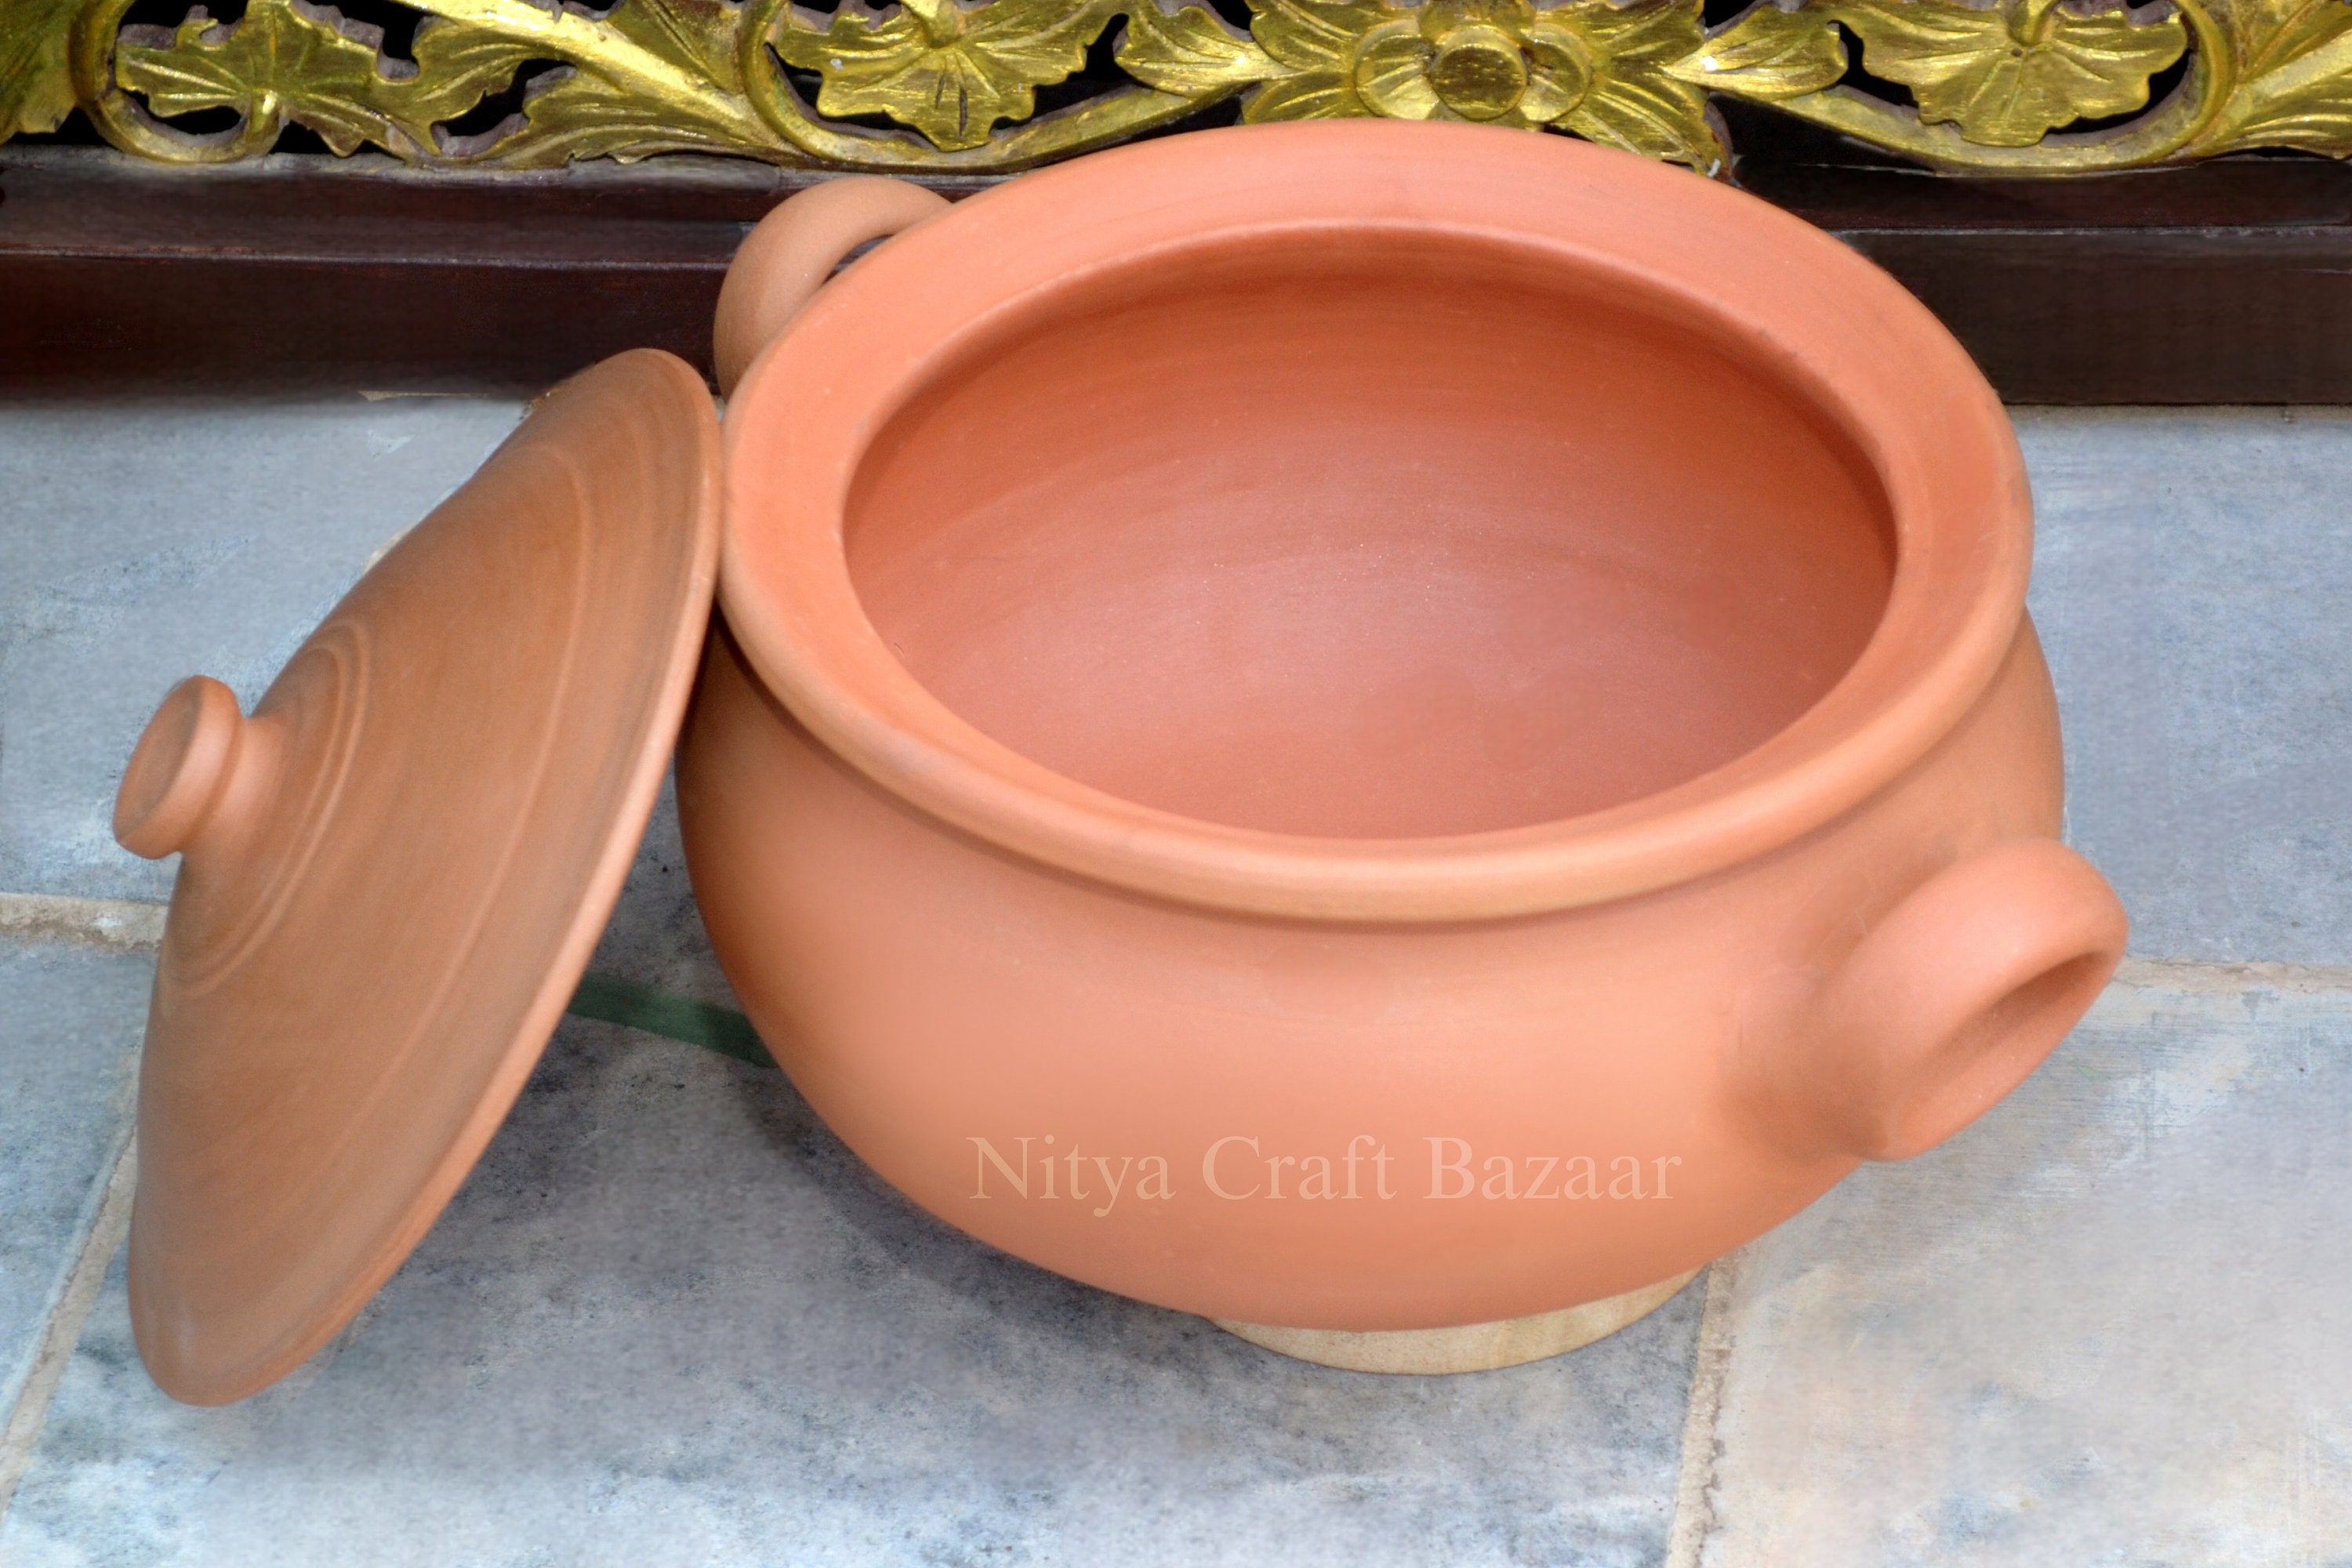 MITTI COOL Indian Clay Kadai/Earthen Kadai/Mud kadai/Clay pots for  Cooking/Biryani Pot for Cooking with Lid/Mitti Handi Earthen  Cookware_Unglazed for